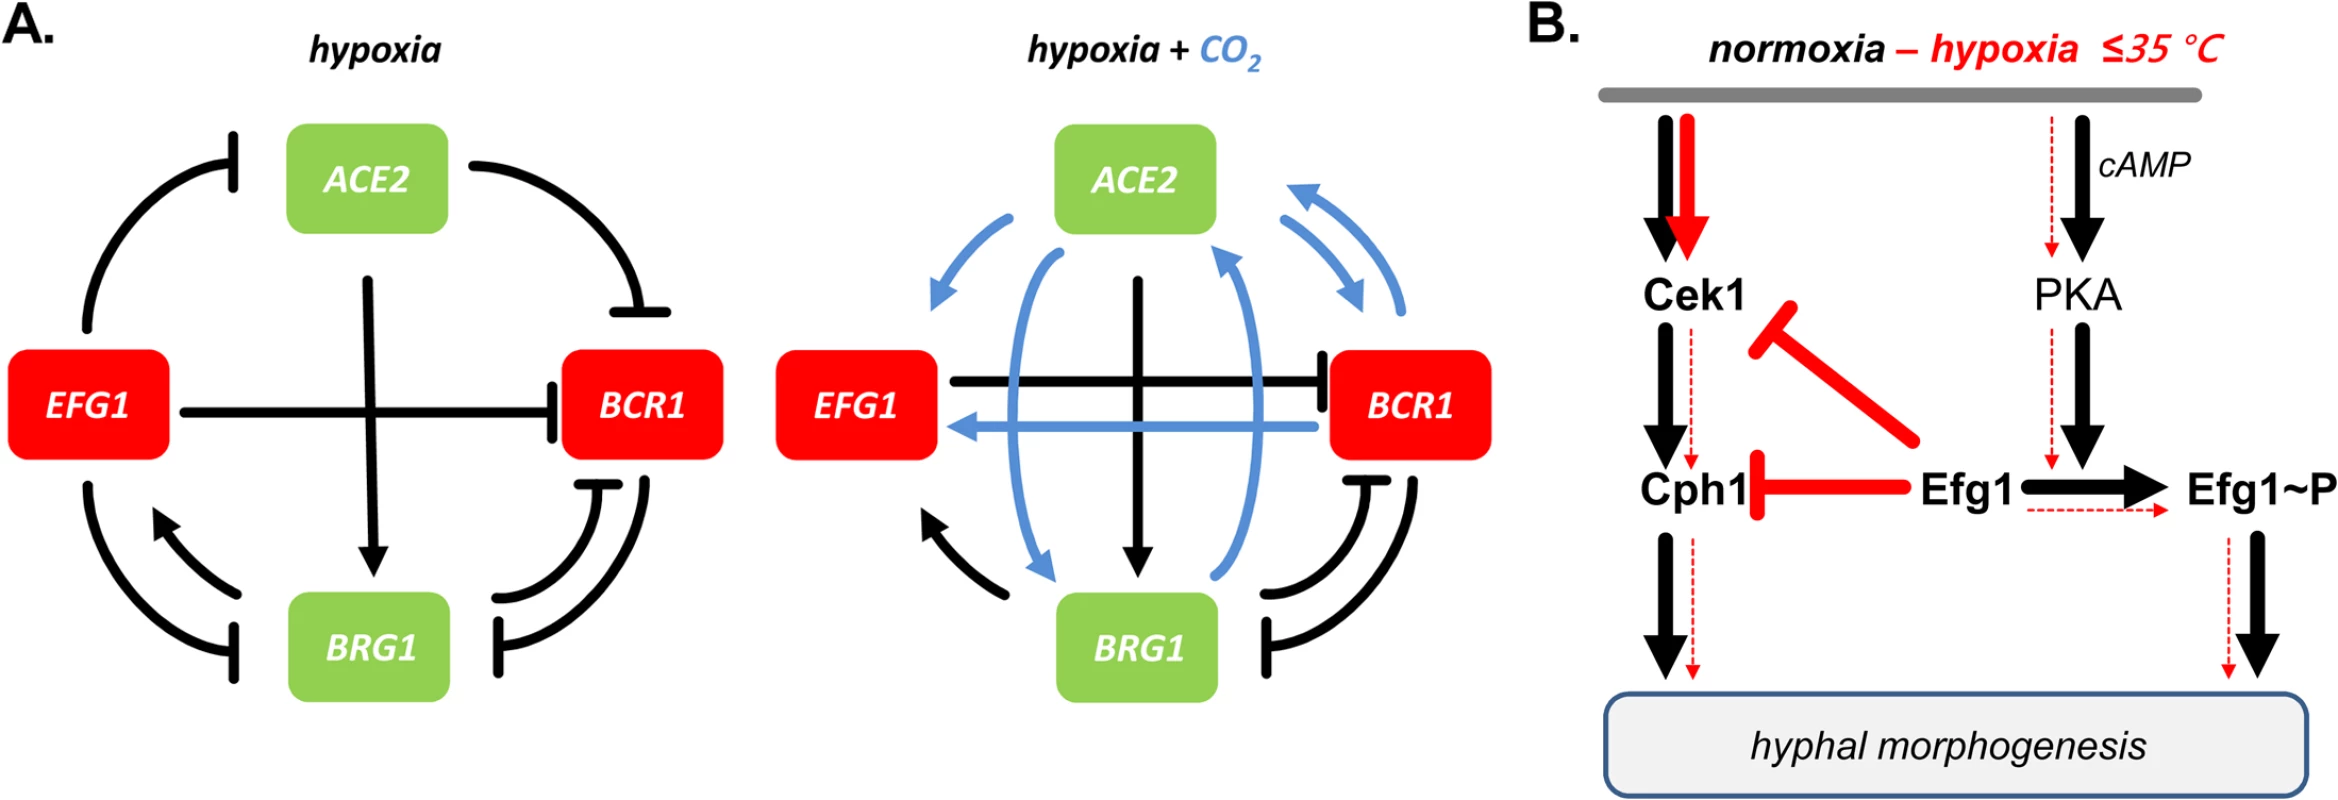 Models for transcriptional regulation and morphogenesis under hypoxia.